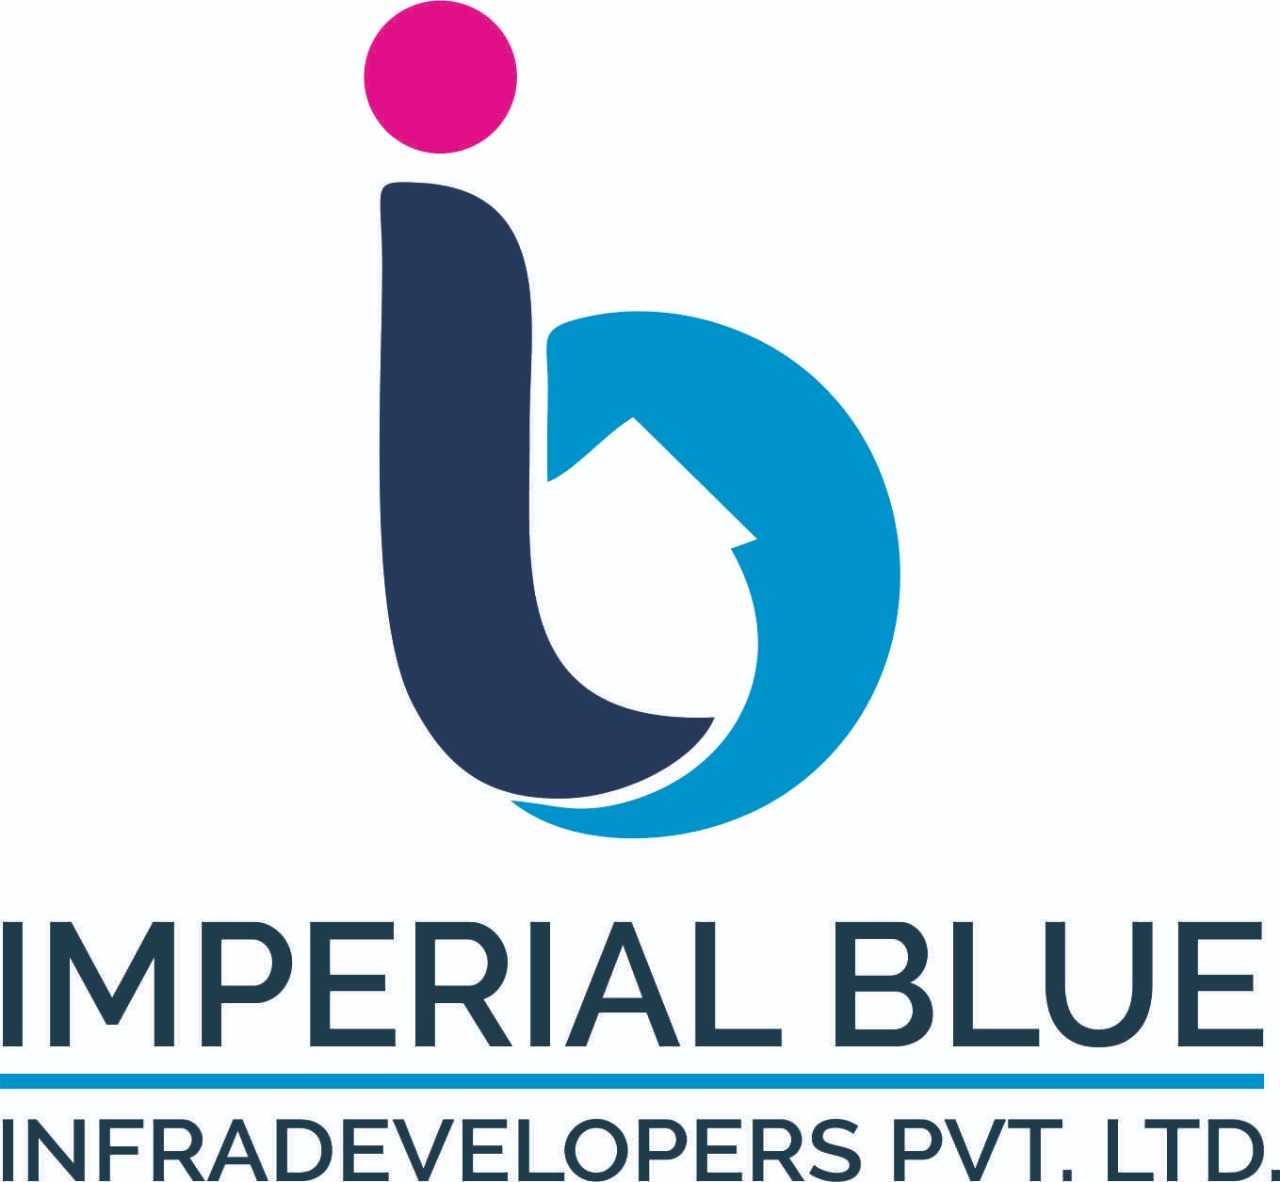 Imperial Blue Infradevelopers Pvt Ltd